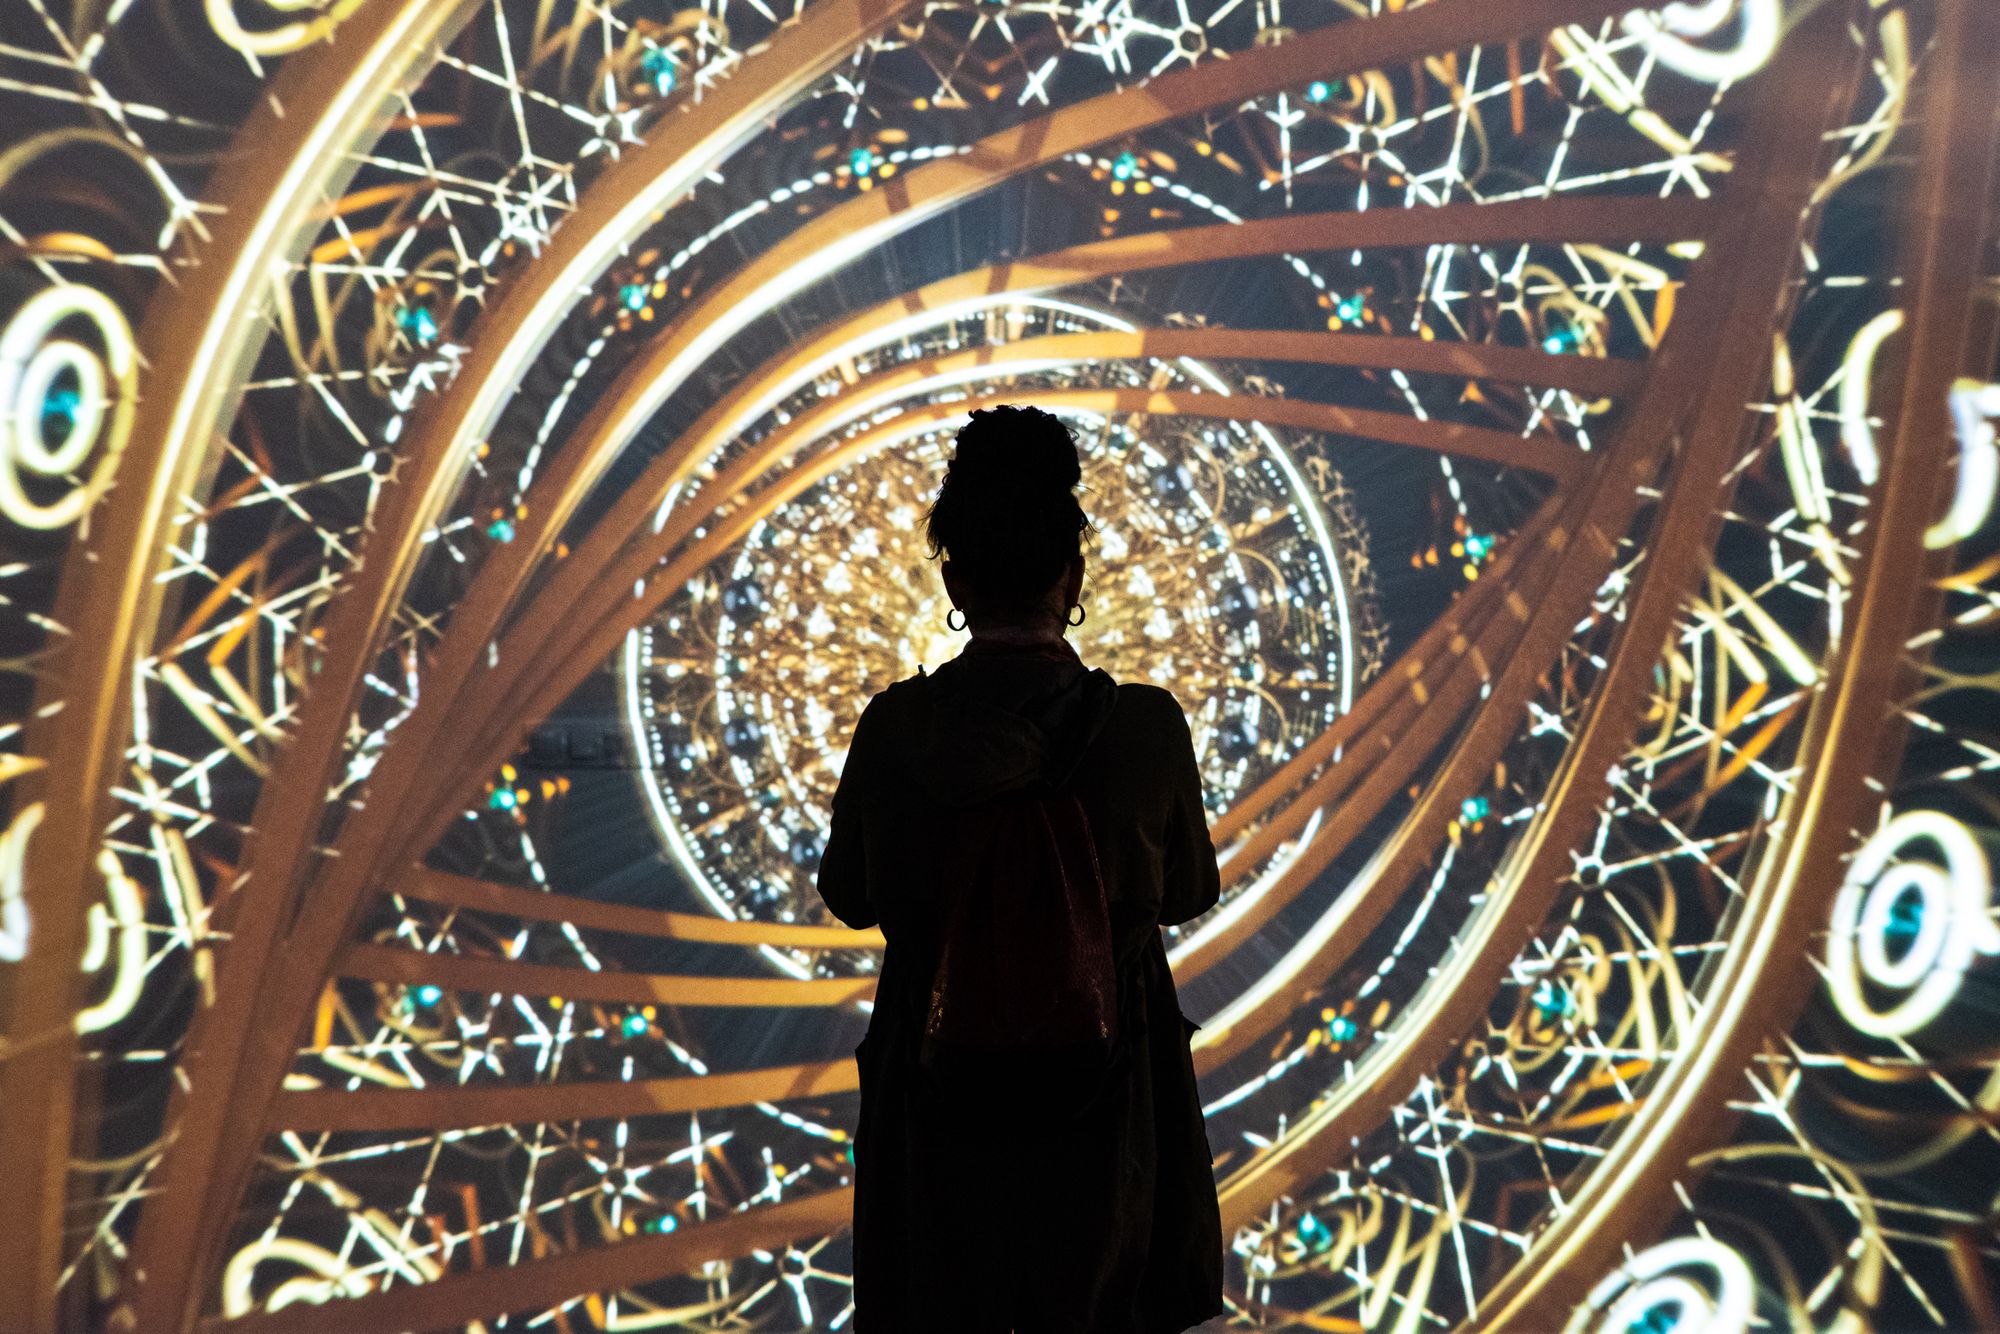 Cinema Mystica—The journey of senses in a digital art exhibition